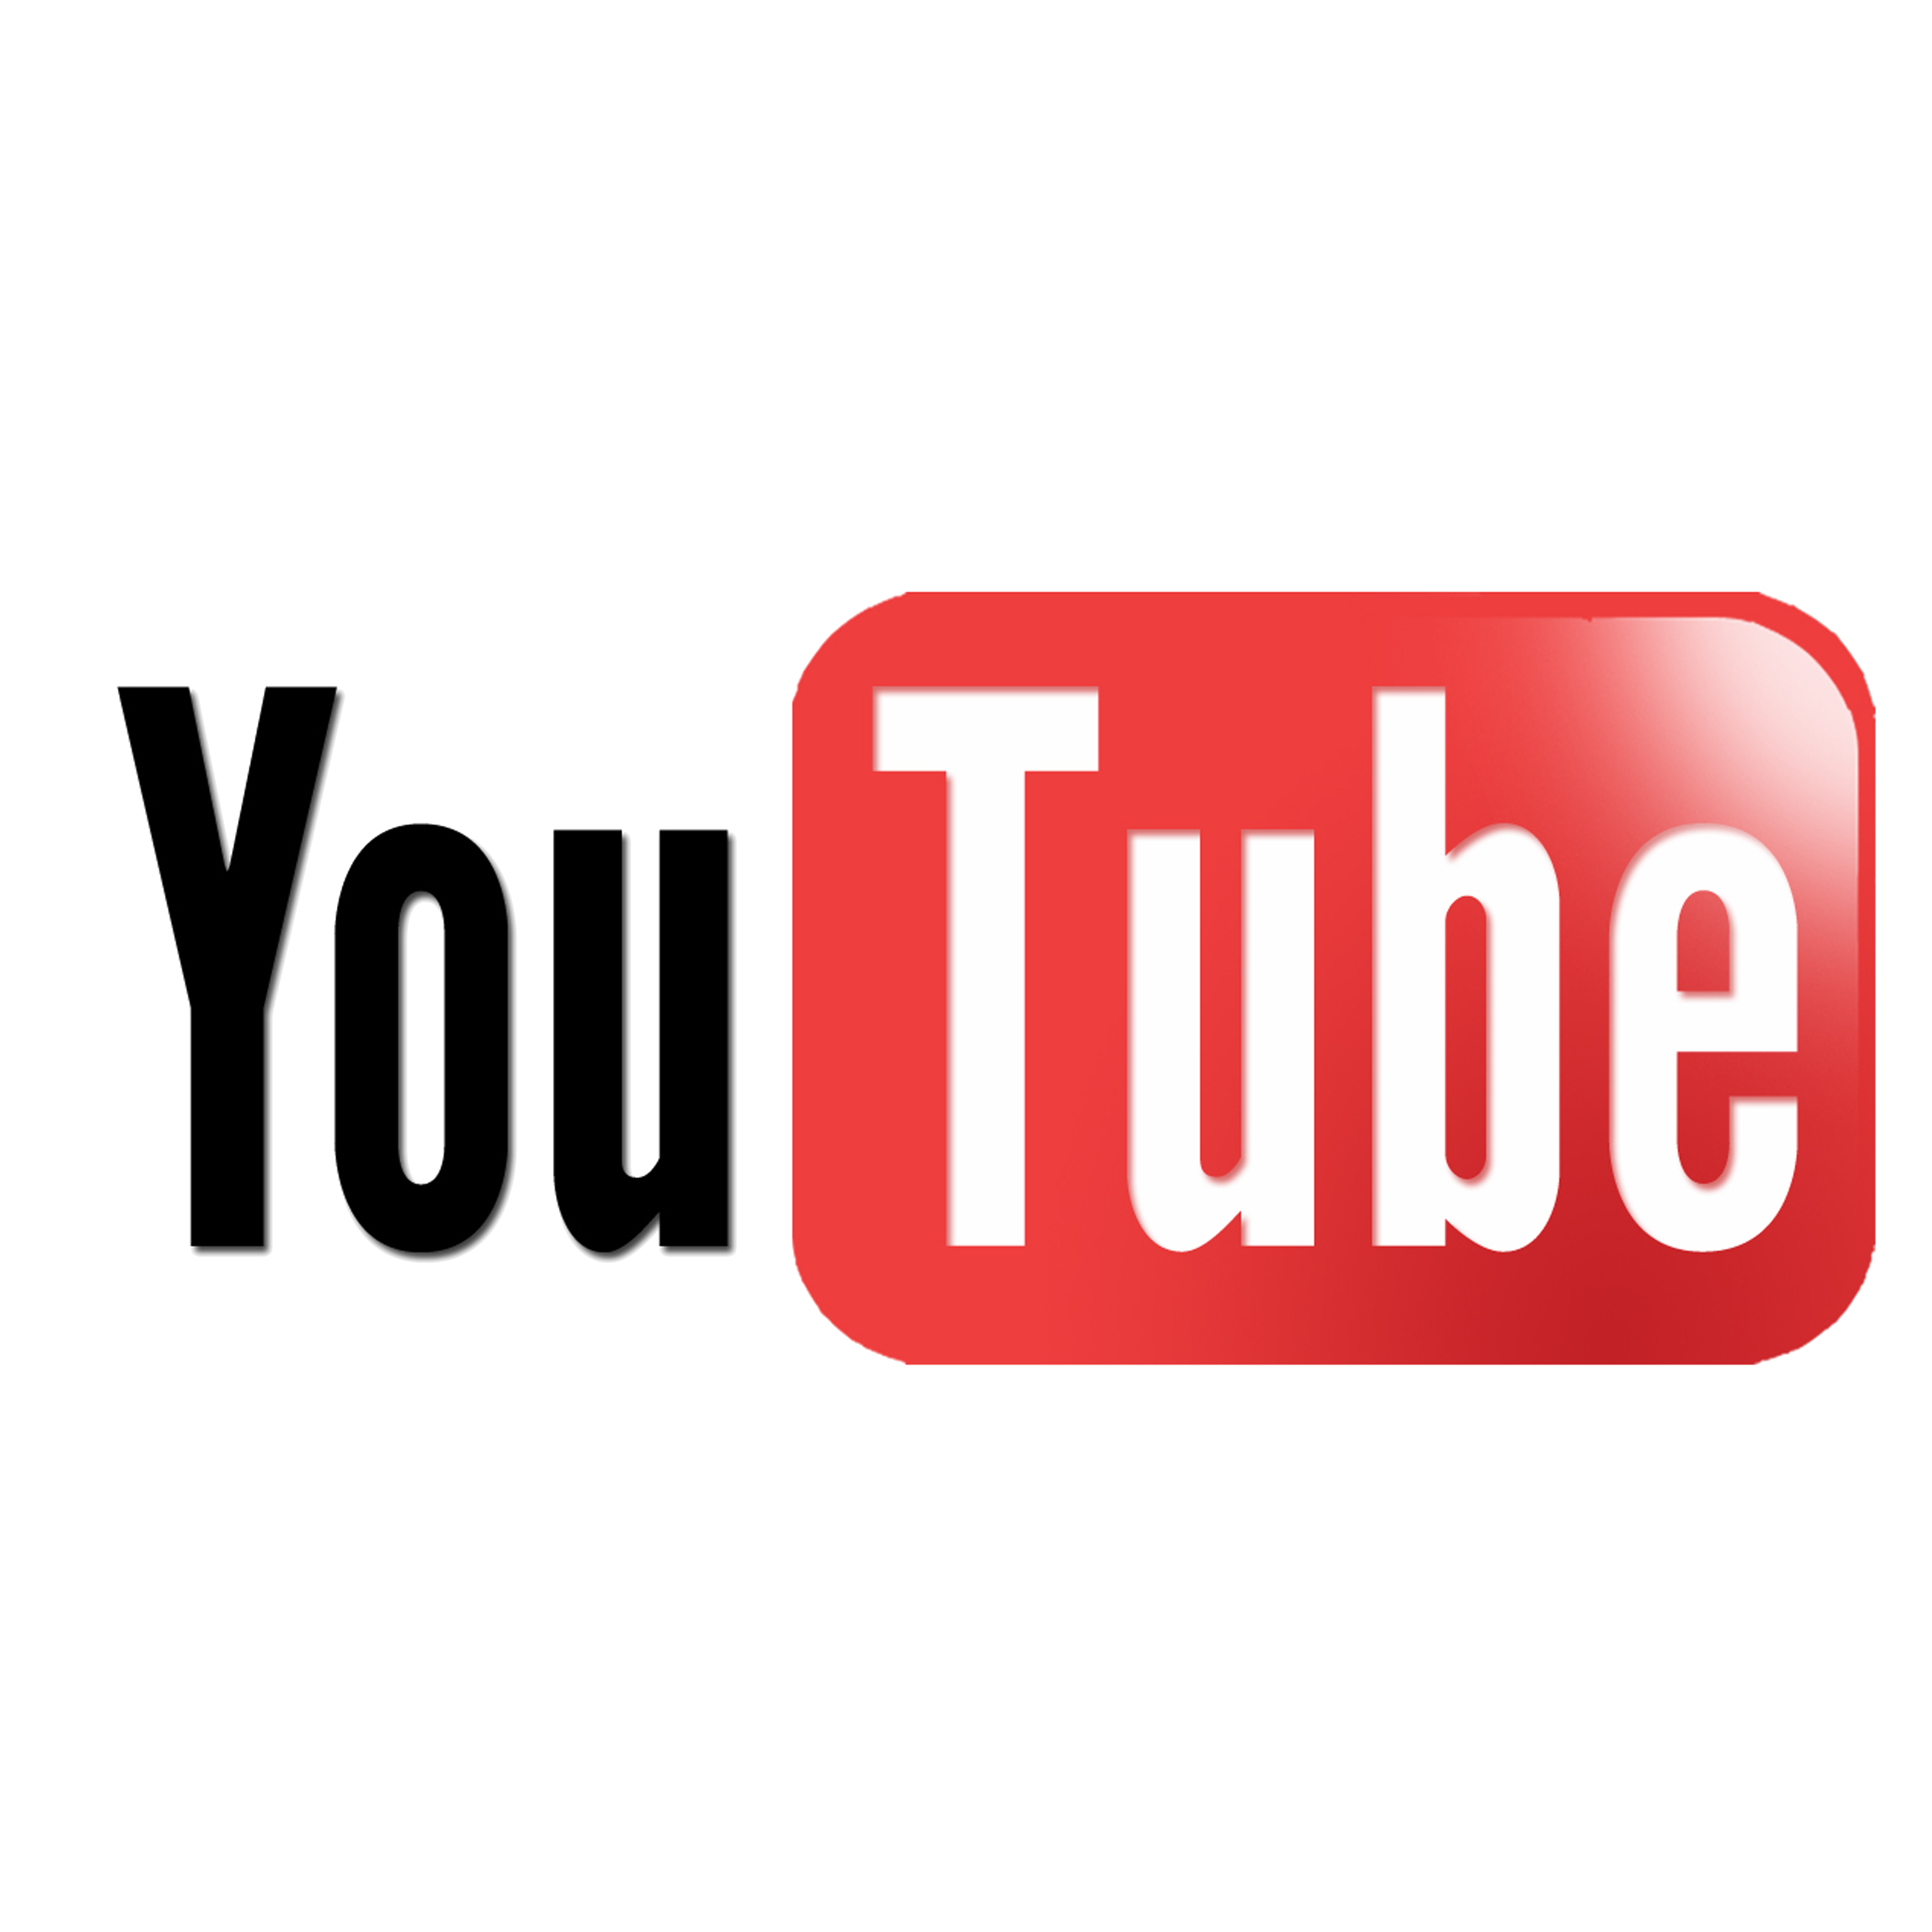 Youtube Logo PNG Free File Download